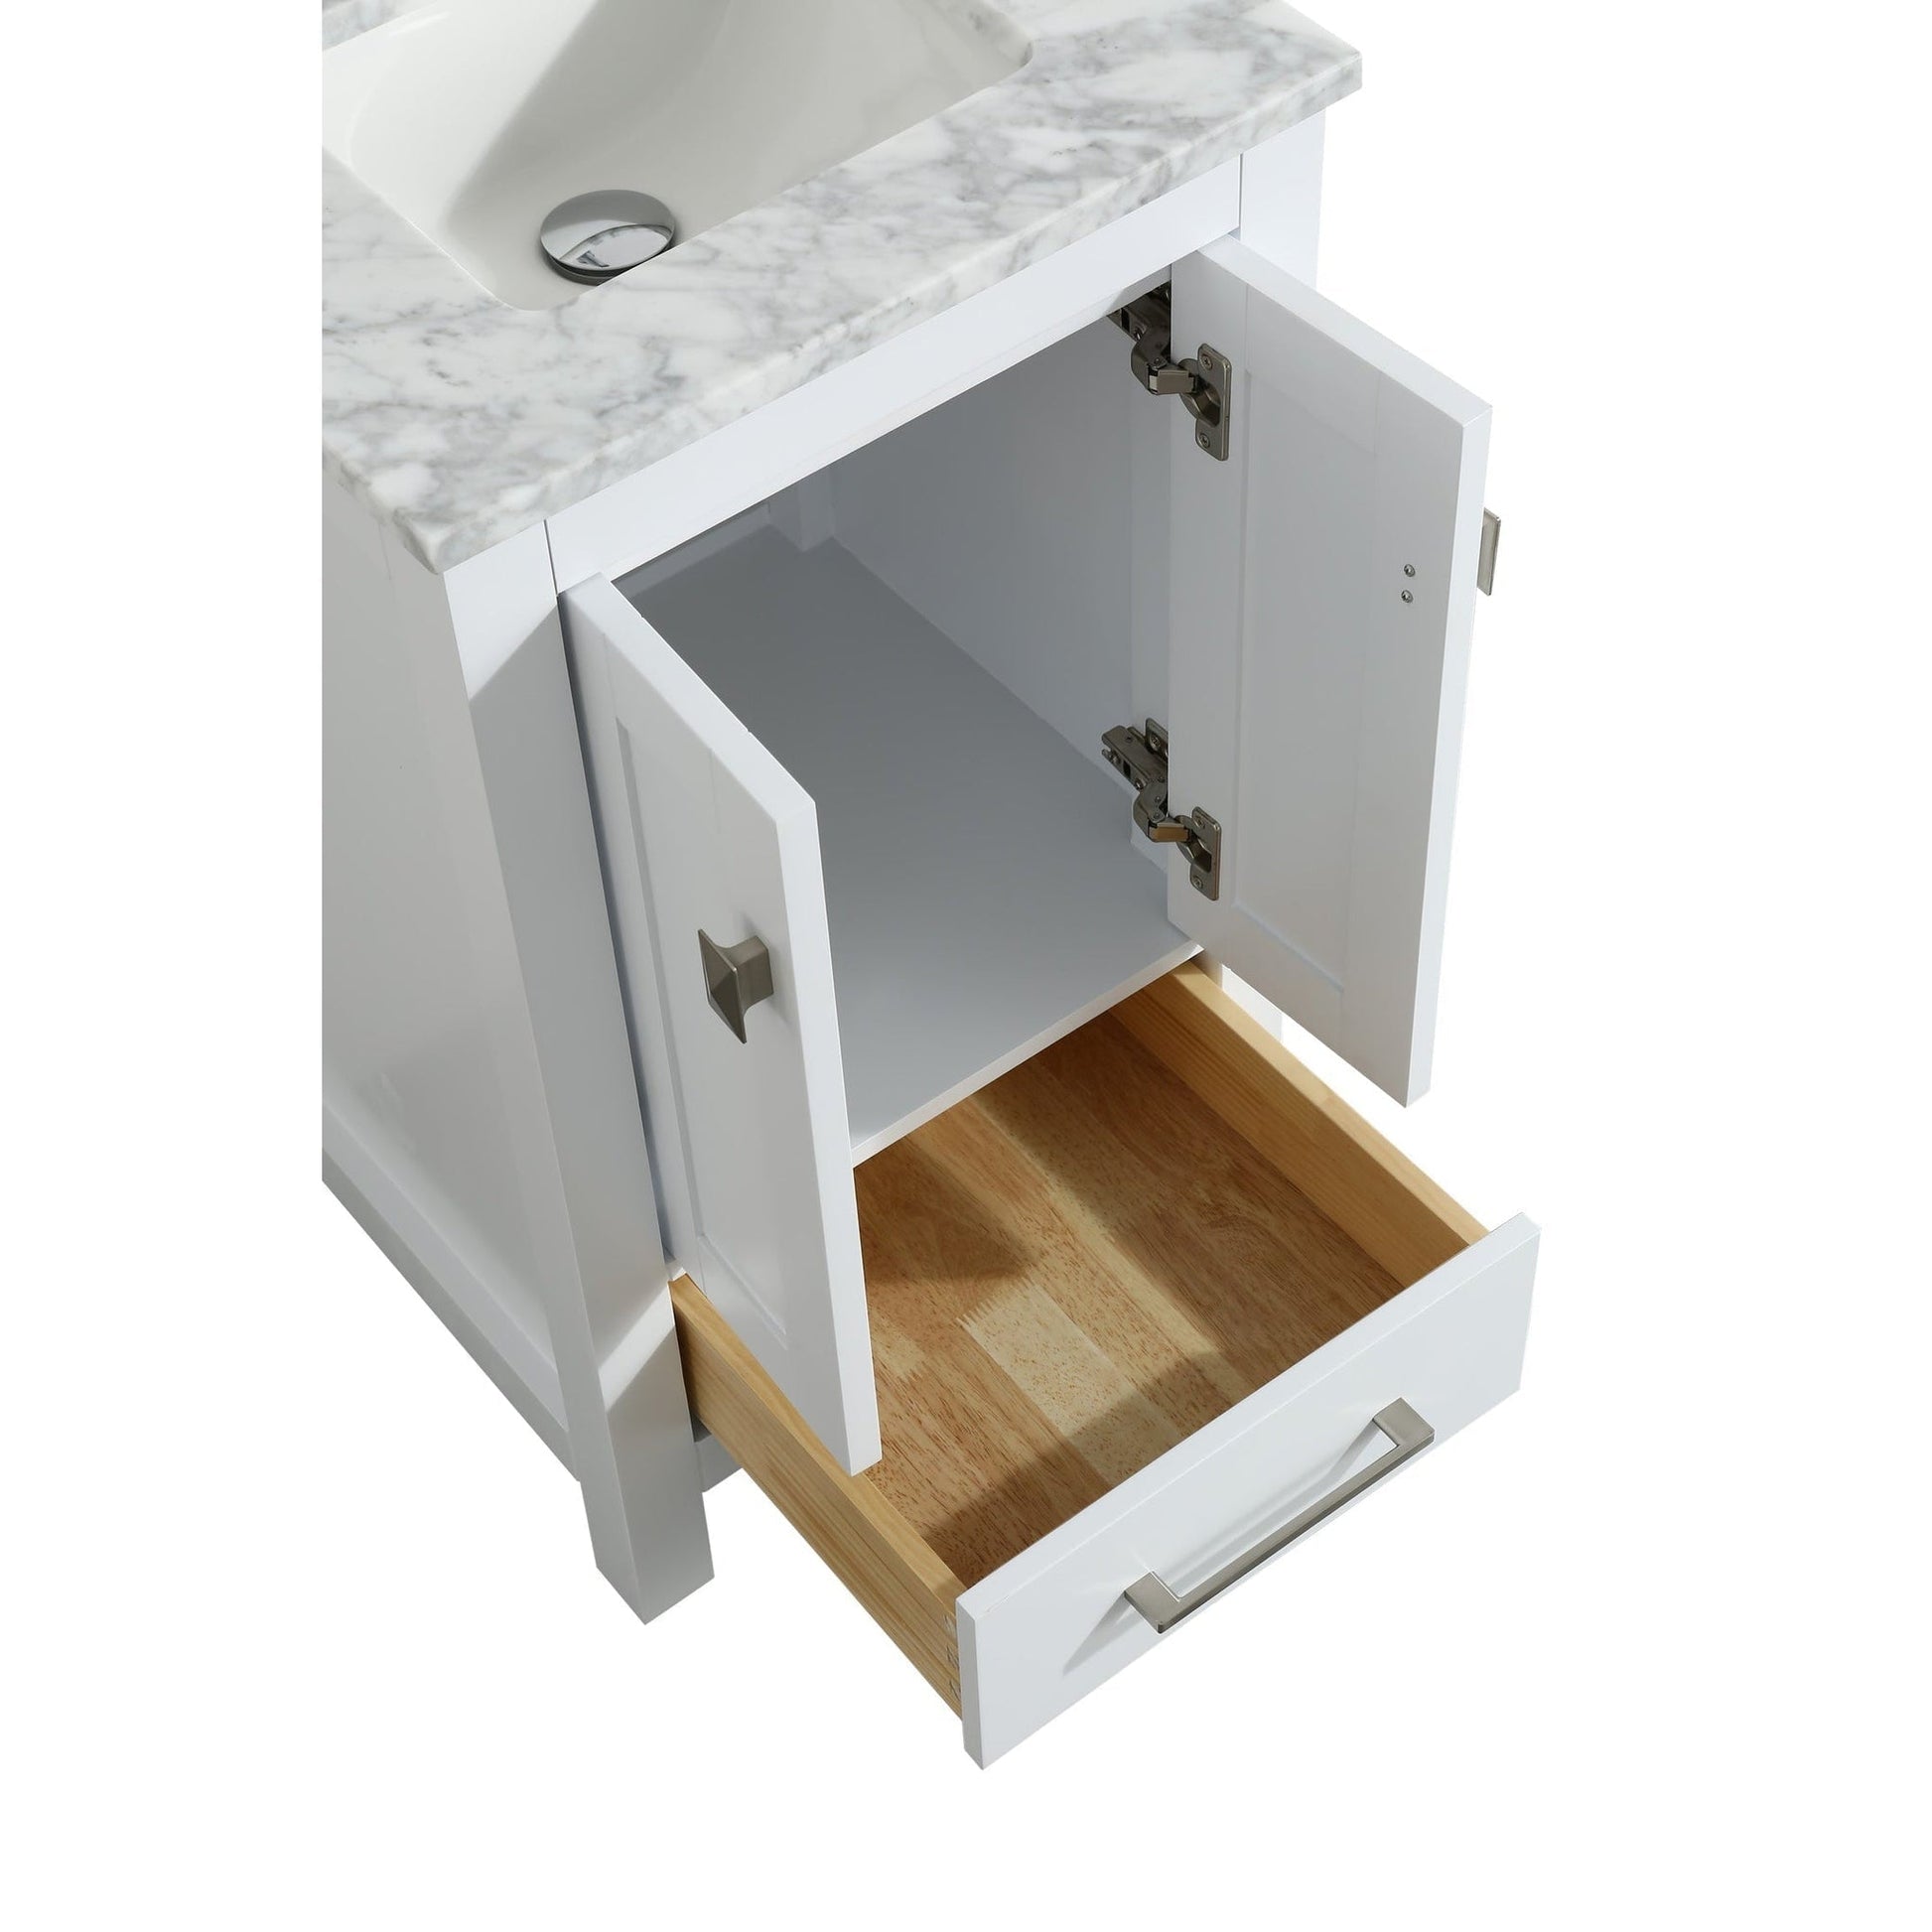 Eviva London 24" x 34" White Freestanding Bathroom Vanity With Carrara Marble Countertop and Single Undermount Sink